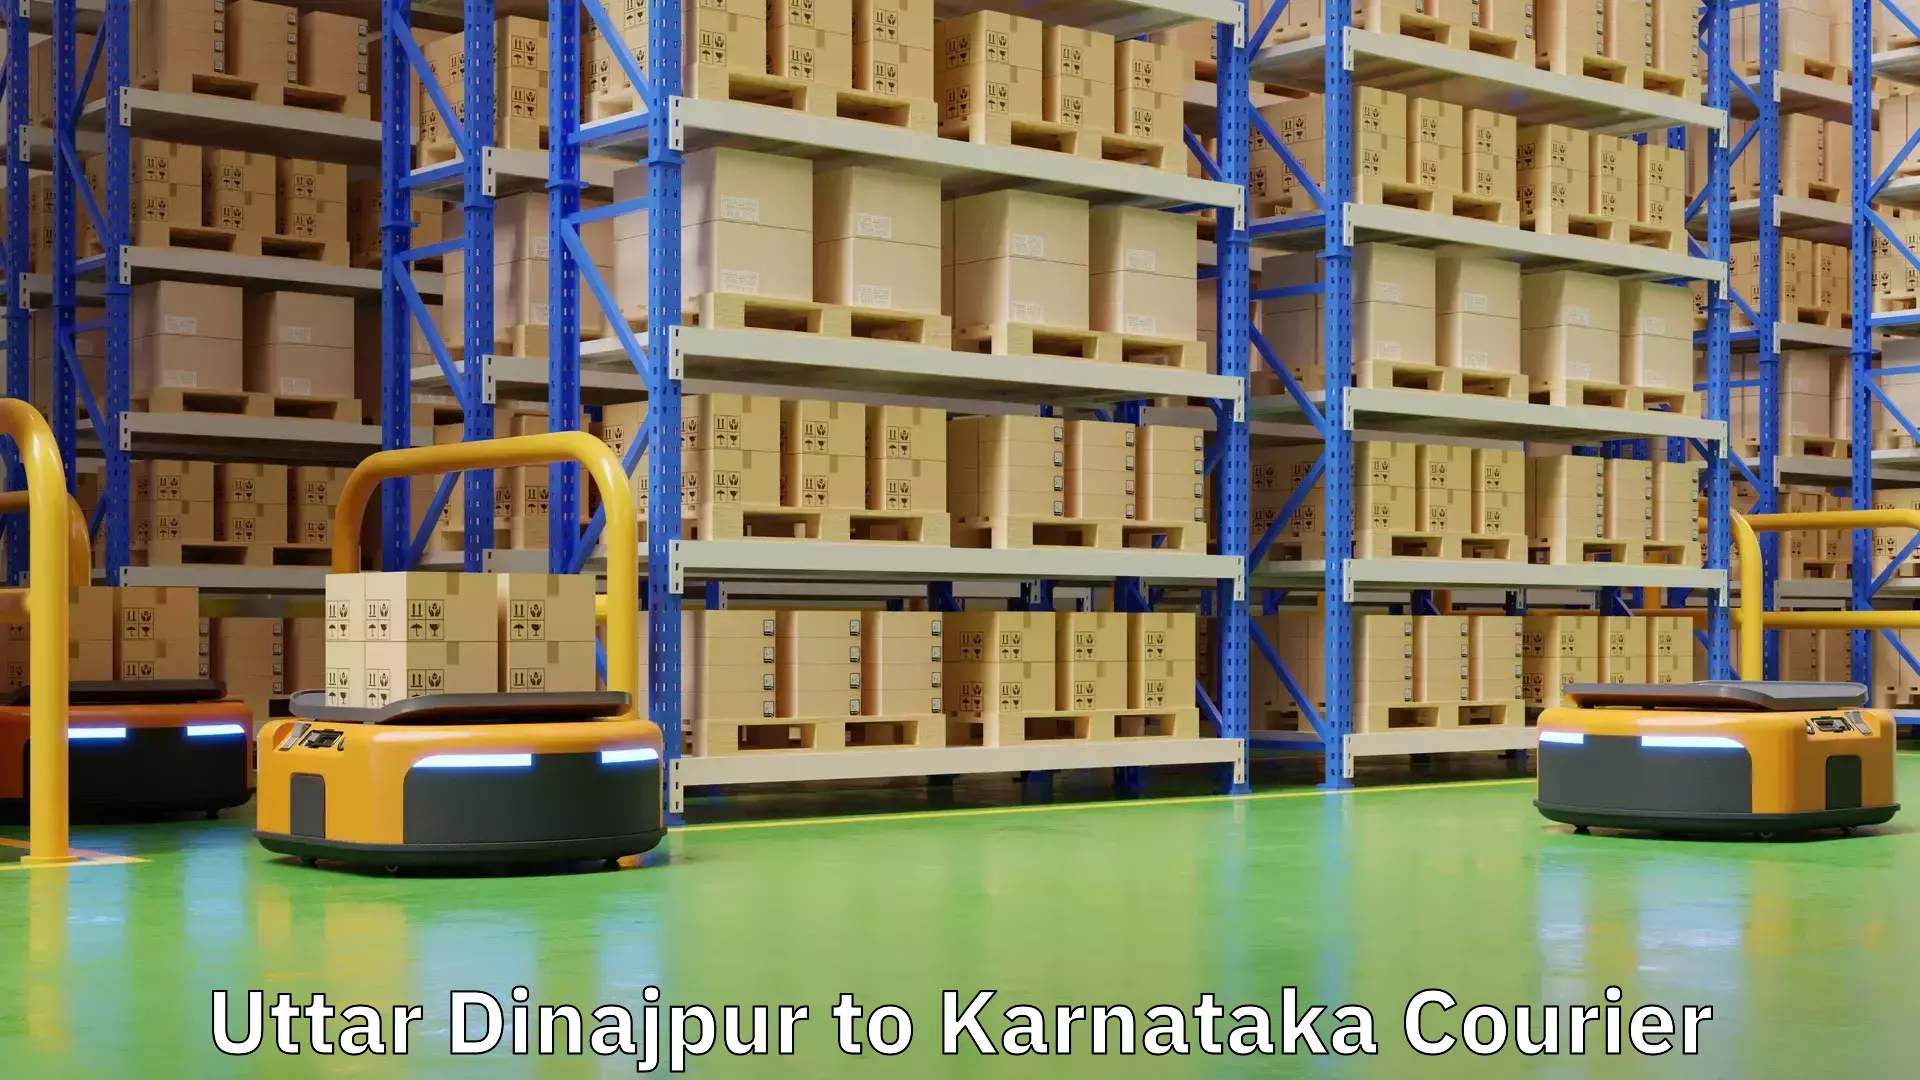 Advanced tracking systems Uttar Dinajpur to Karnataka